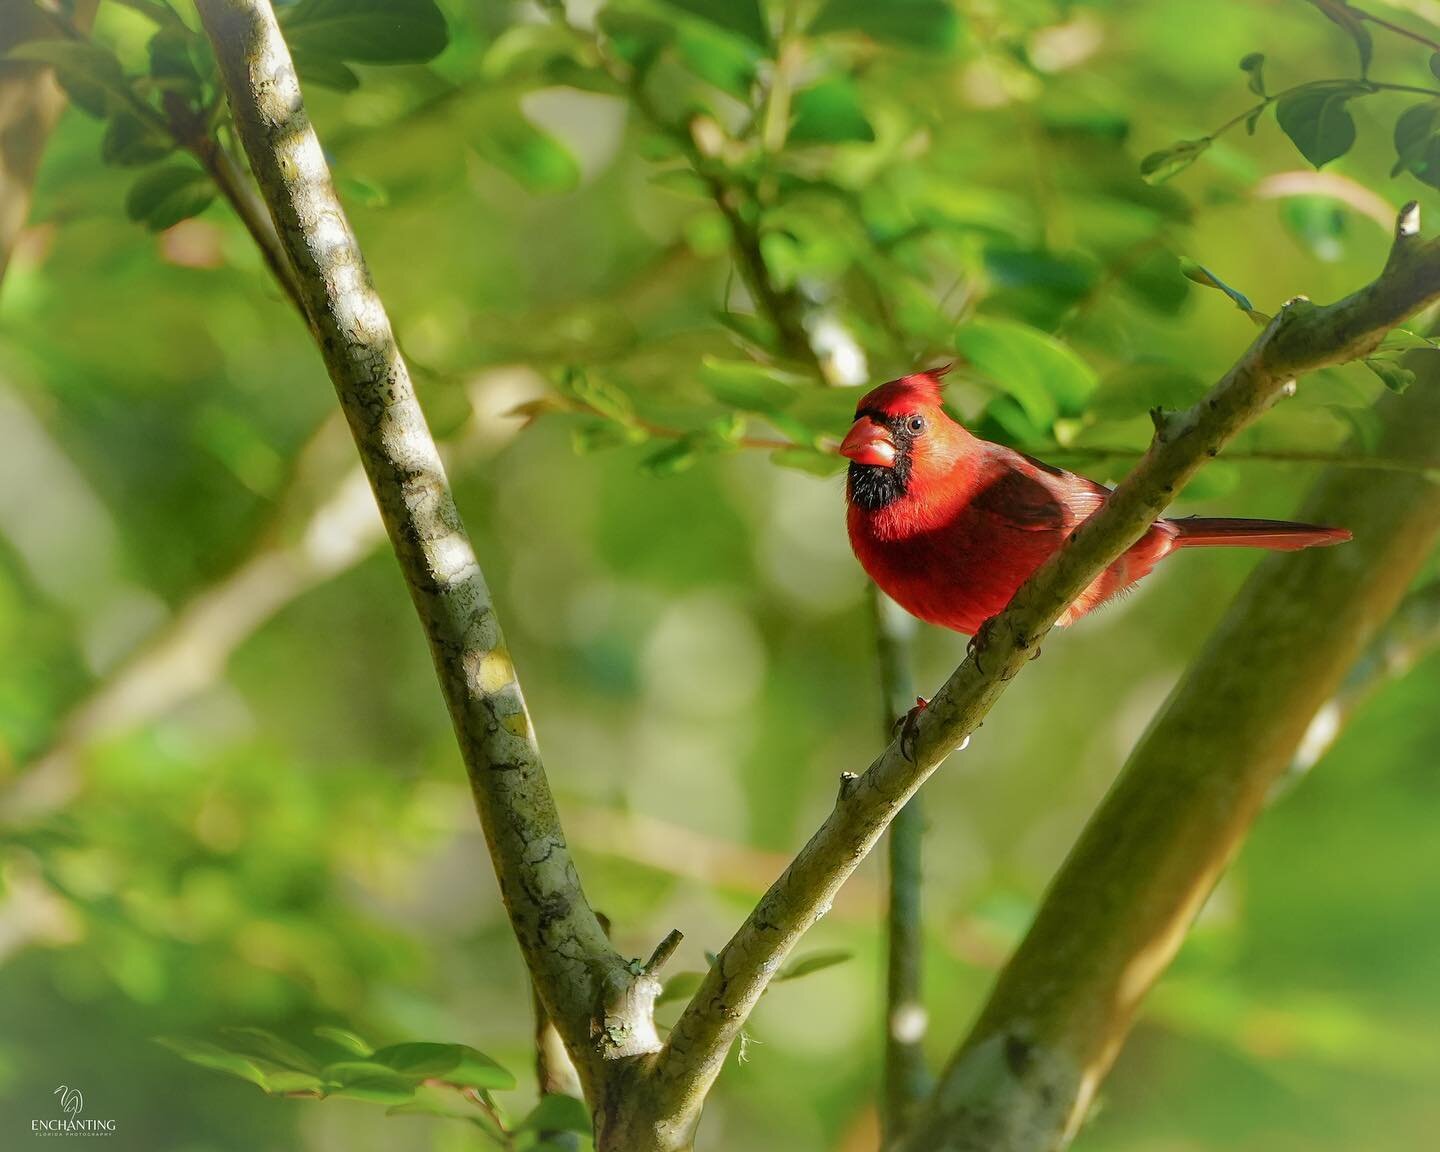 Day 16: Vibrant #rebelsunitedmay2023potd 
A cardinal is always a welcome POP of color to our world! Photo taken 4/18/23

#cardinalbird #rebels_nature #futurewomenphotography #bird_brilliance #beautifulbird  #birdstagram #bestbirdshots #tnhusa #raw_bi